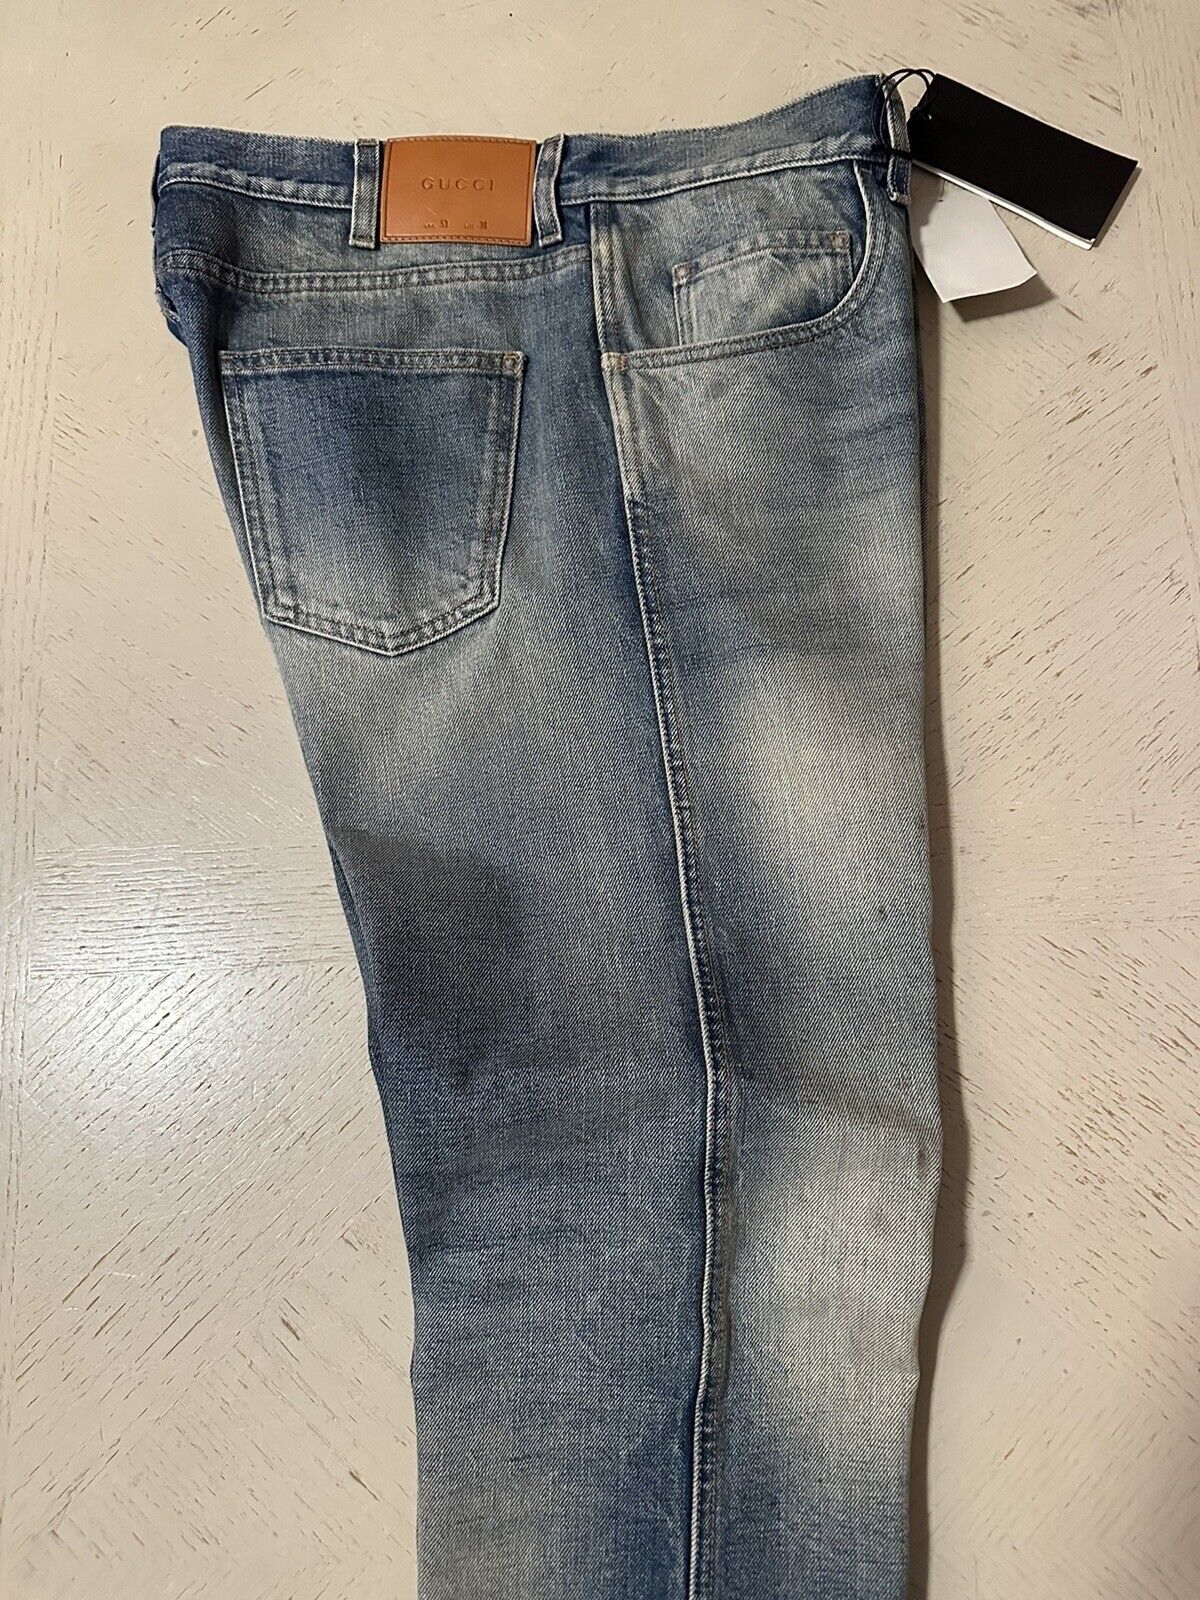 New $1280 Gucci Men’s Jeans Denim Pants Blue 36 US Italy